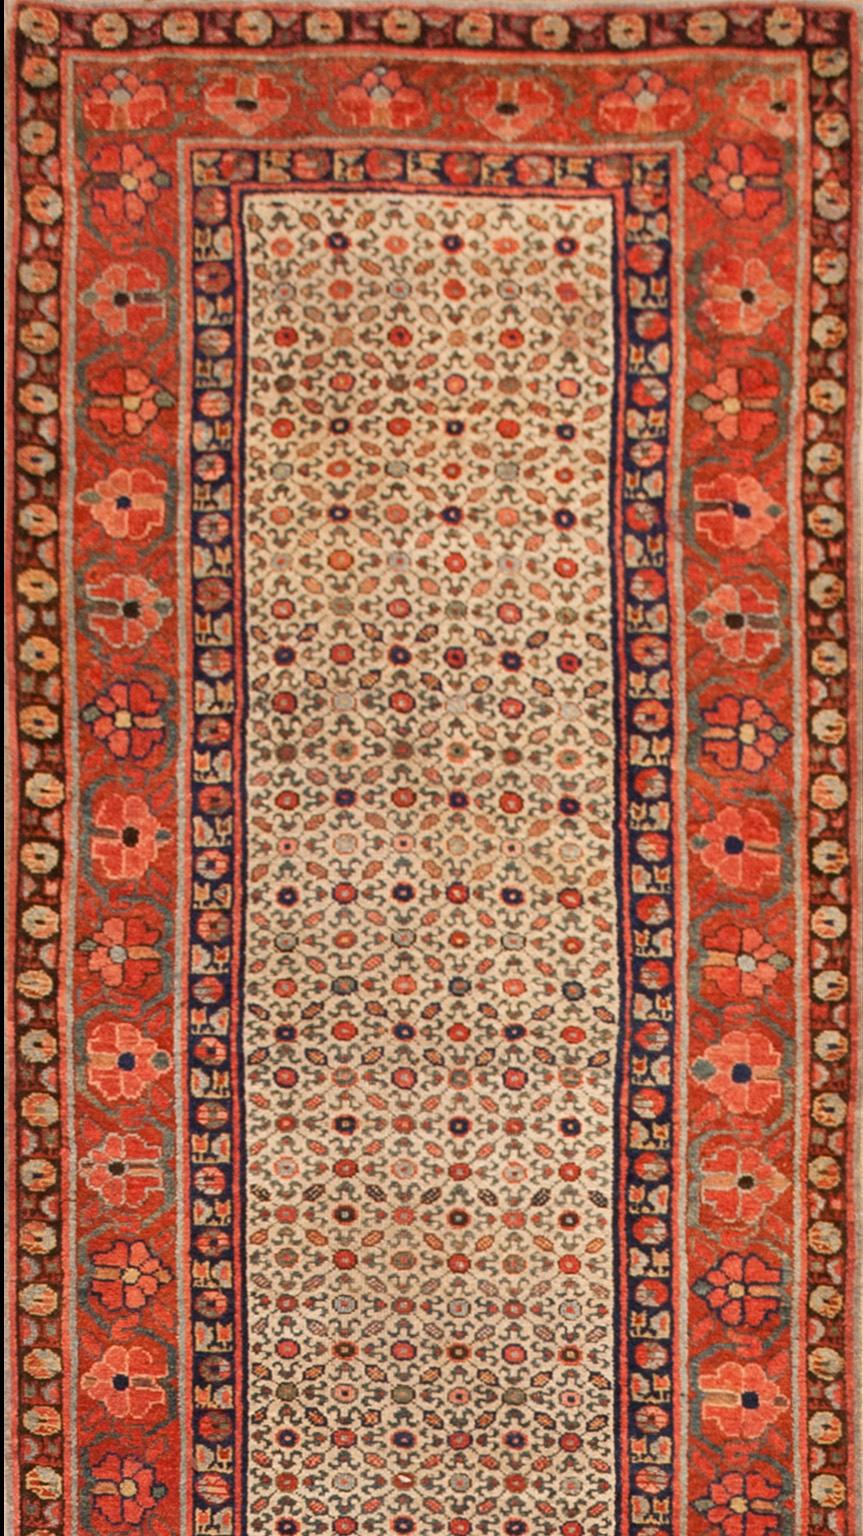 Handmade antique NW Persian carpet. Woven circa 1870 (late 19th century). Persian informal rug, runner size: 3'0